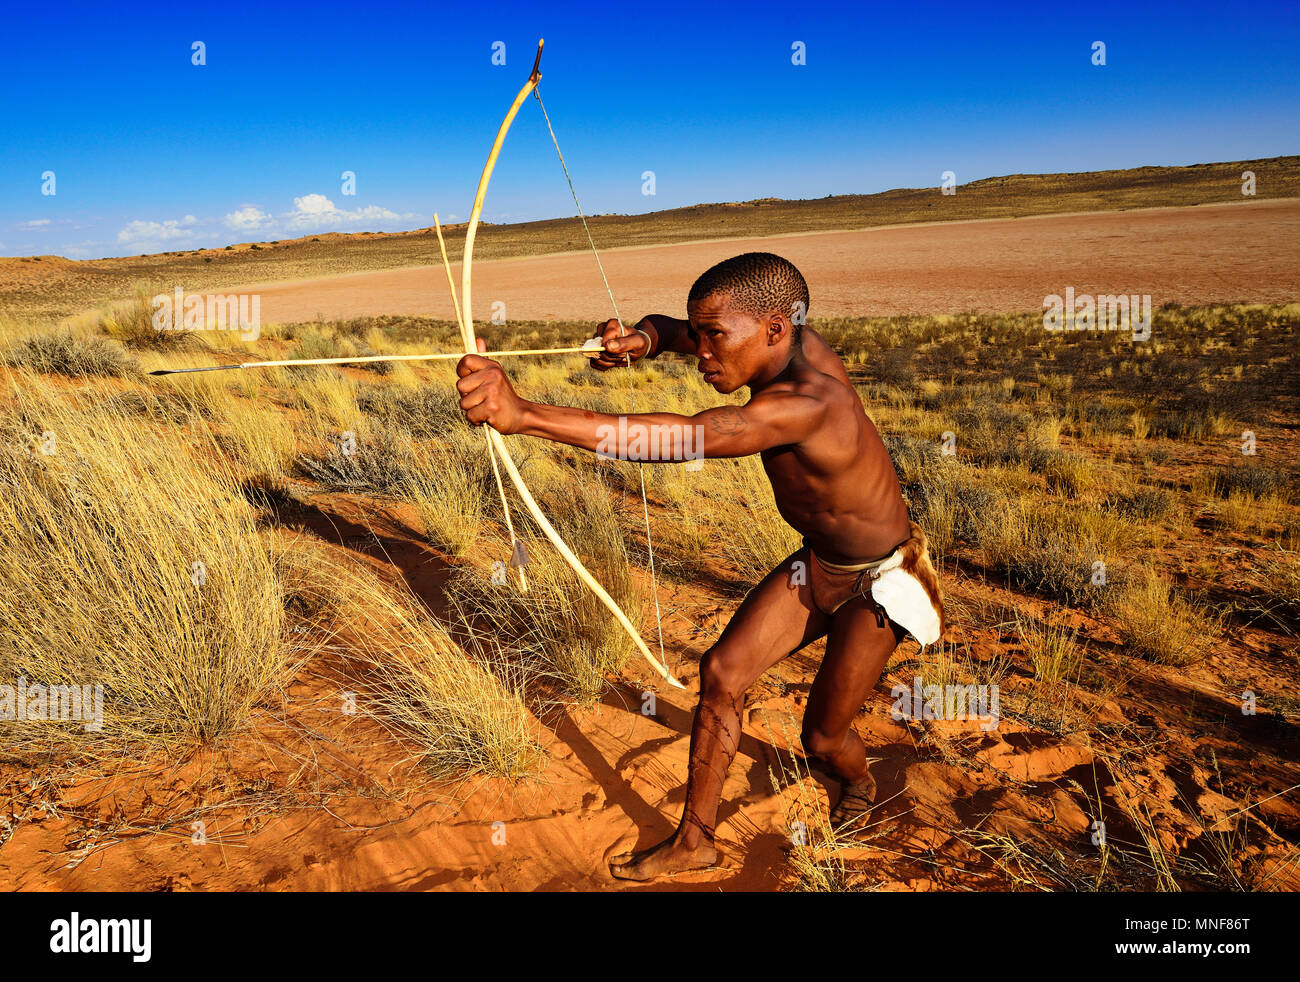 Bushman Of The San People Hunting Xaus Lodge Kalahari Or Kglagadi Transfrontier Park